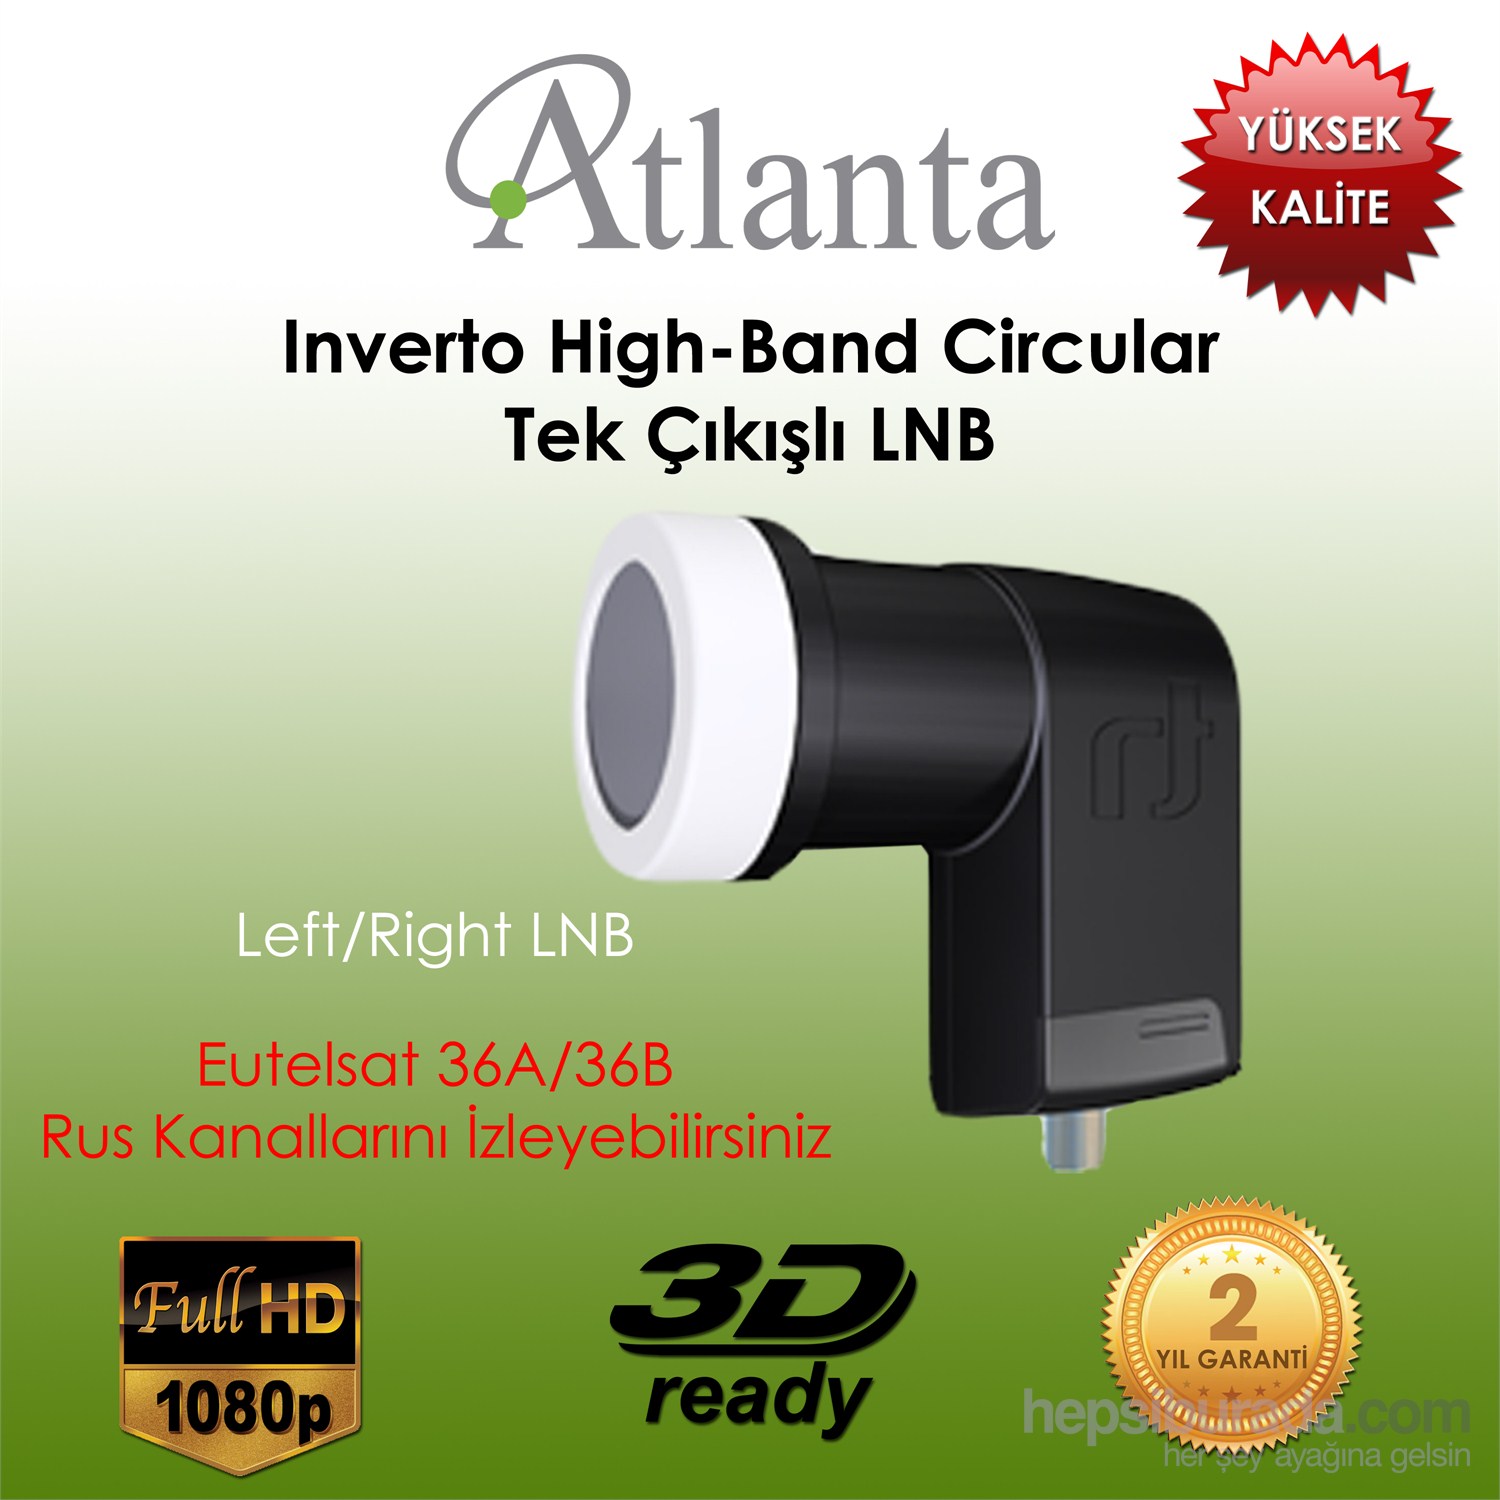 Atlanta Inverto High-Band Circular Single Lnb (Tek çıkışlı)